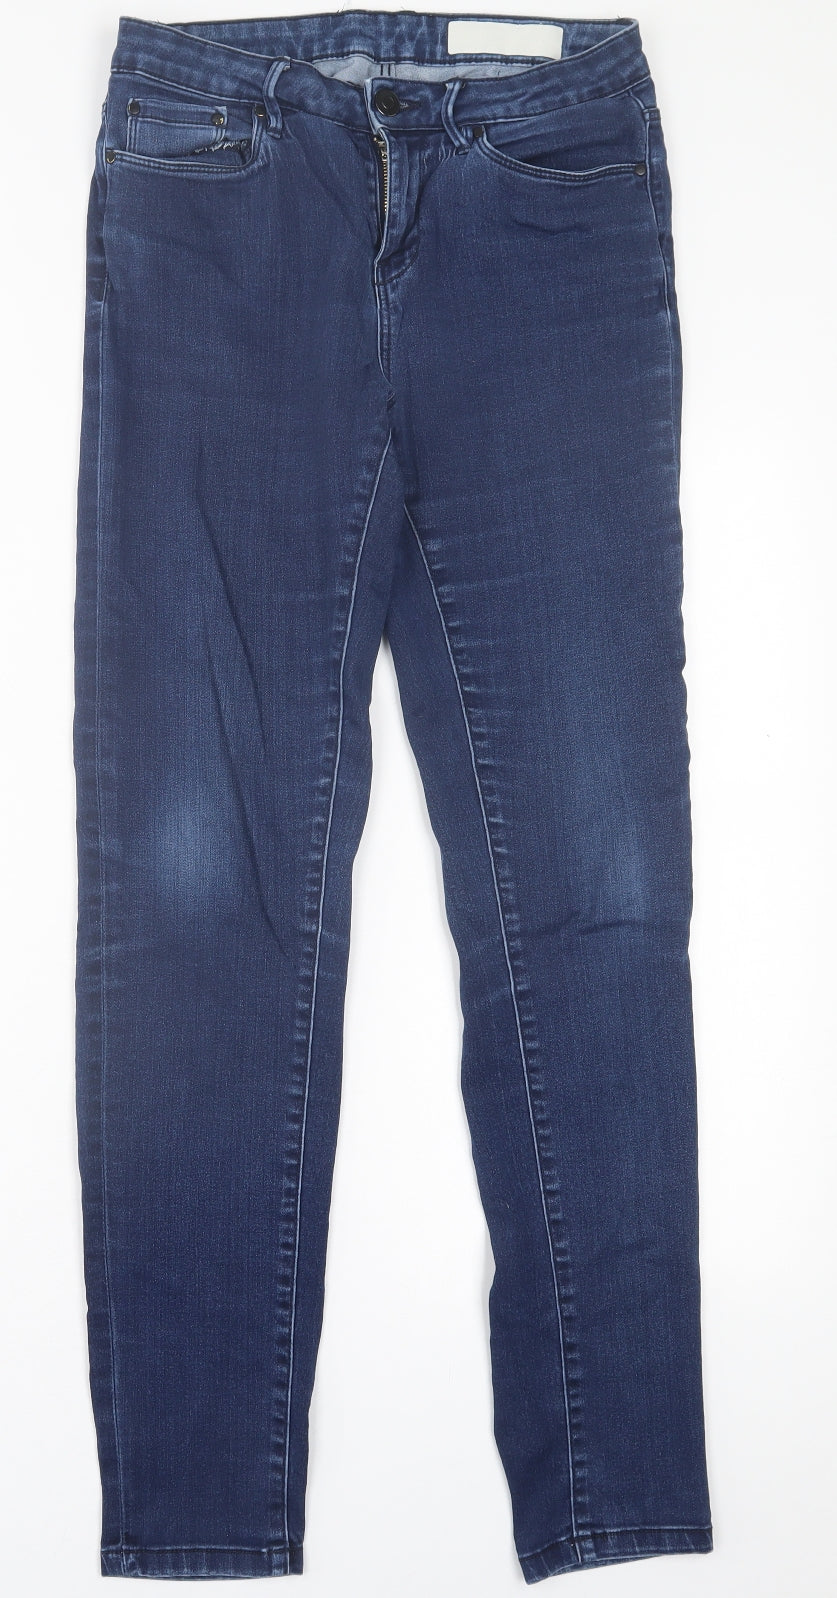 ESMARA Womens Blue Cotton Skinny Preworn – in Size L30 Ltd 30 Jeans in Butto Regular